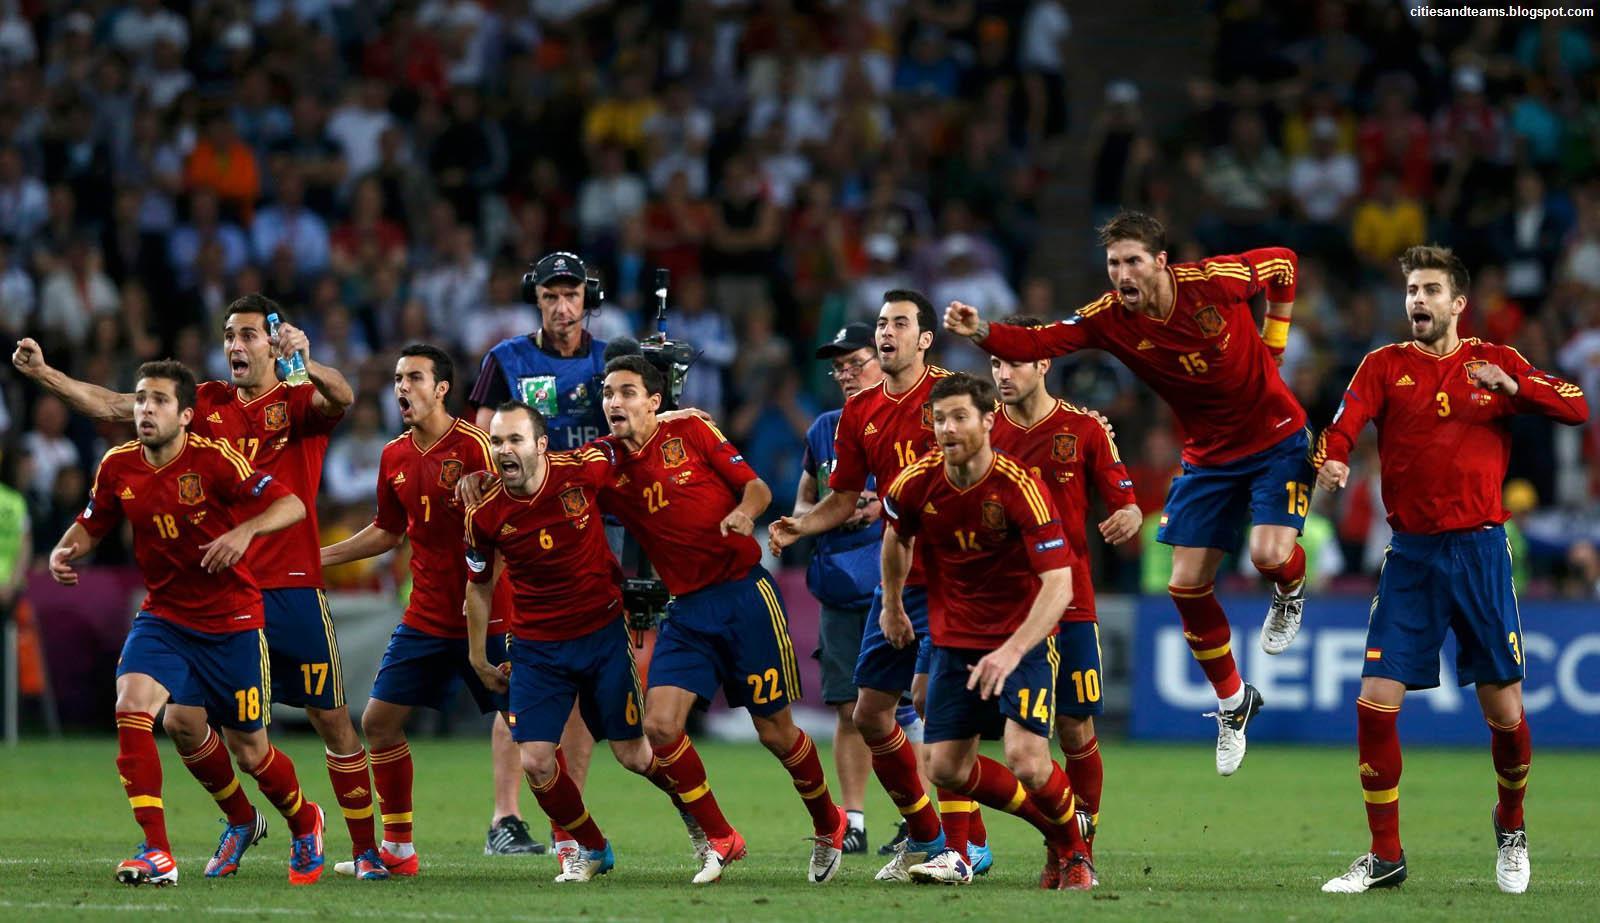 Spain National Football Team Wallpaper, Great HDQ Spain National